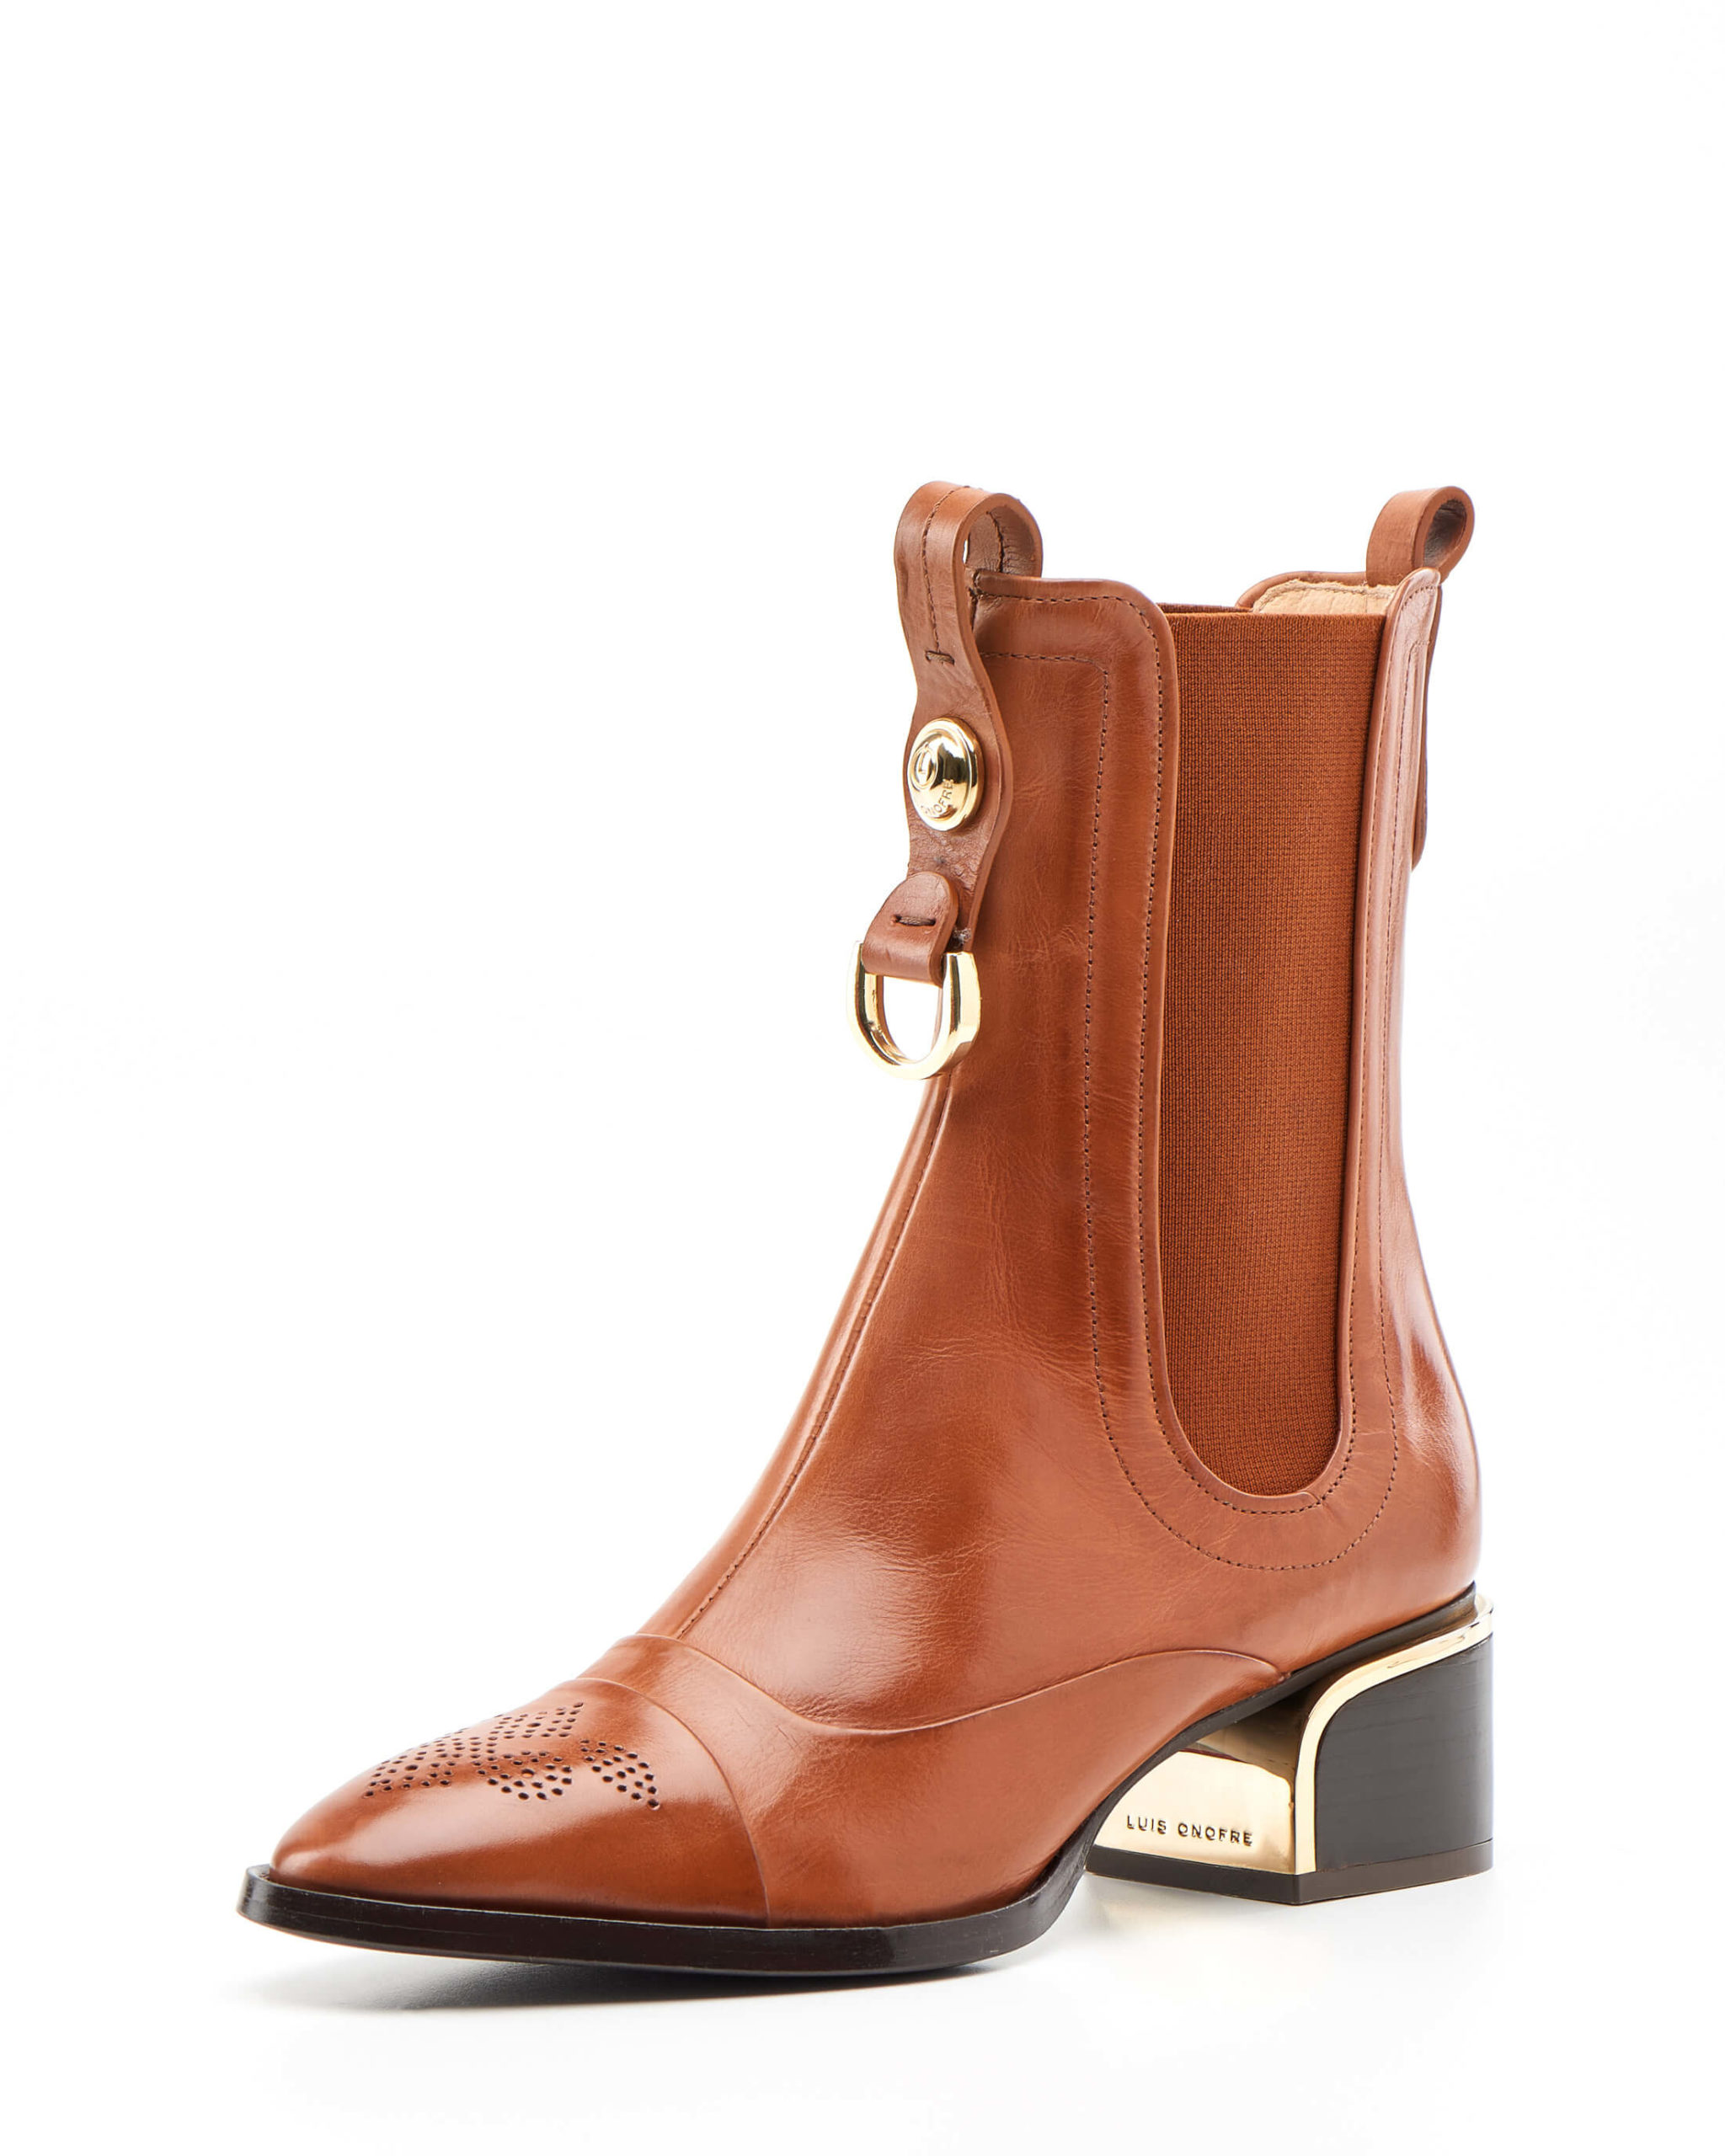 Luis Onofre Portuguese Shoes FW22 – 5286_02 com florao- BURLYWOOD Camel-2